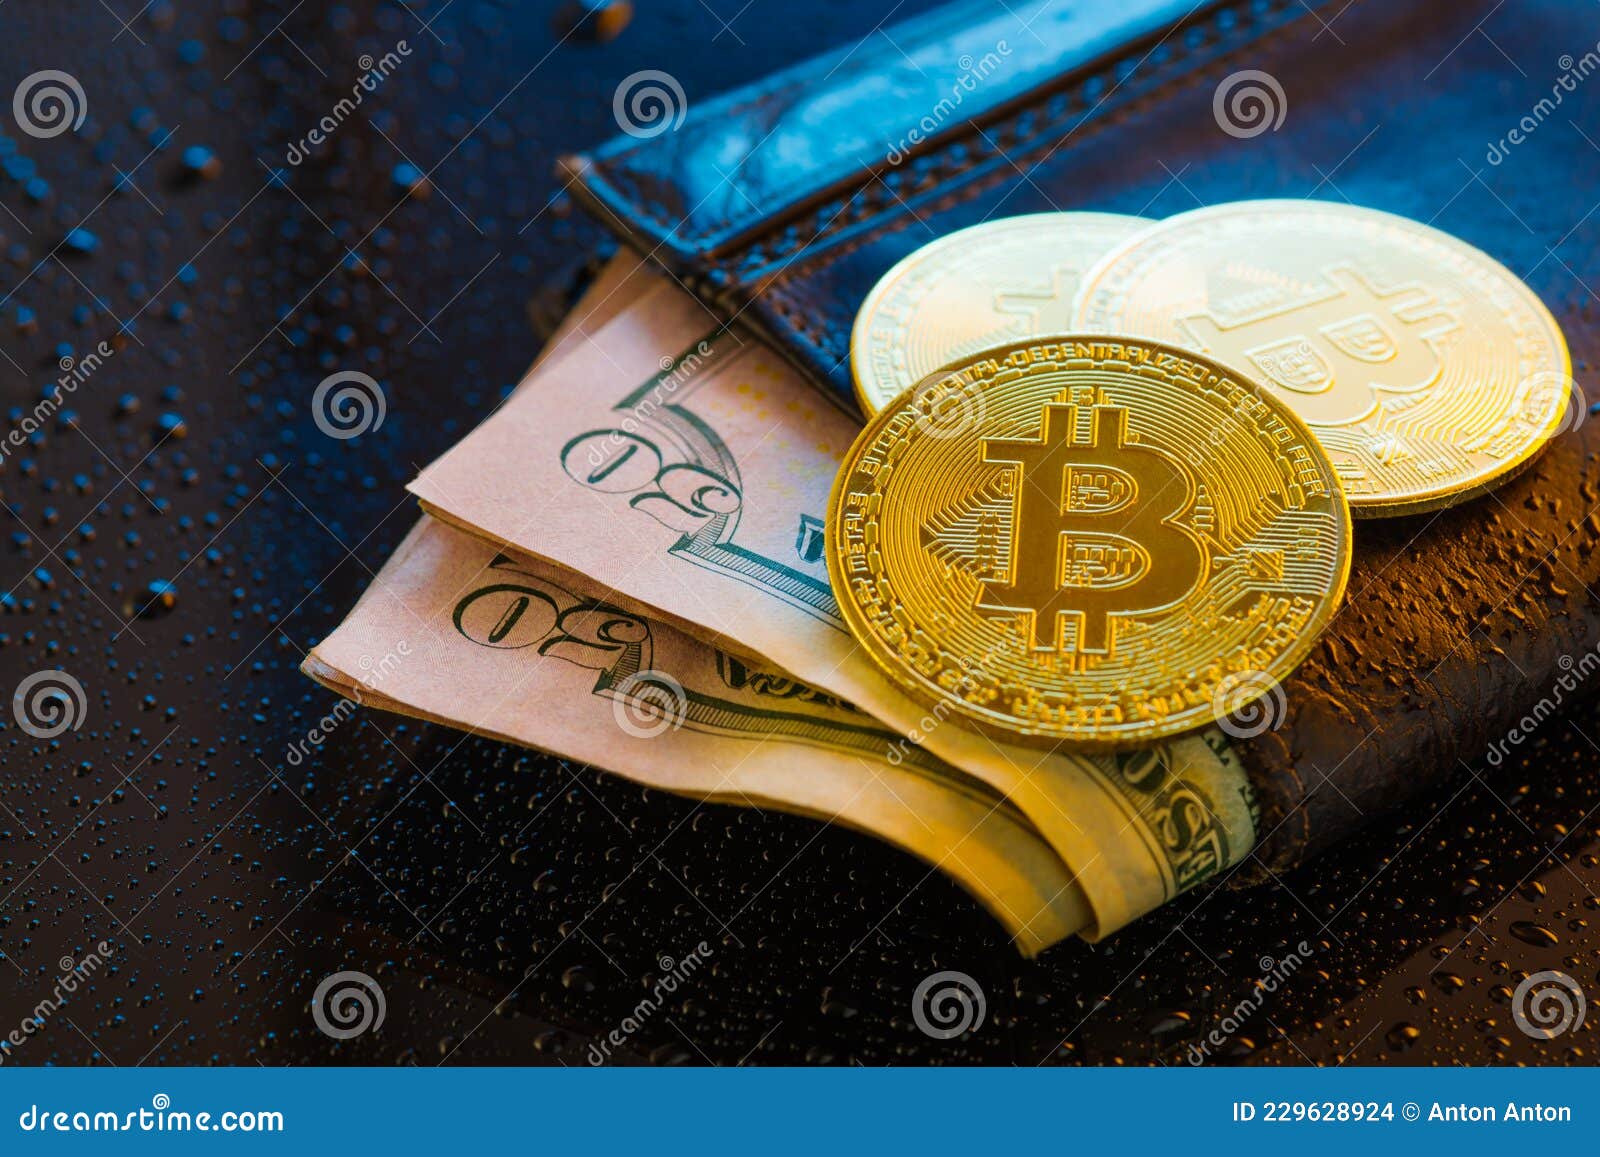 Convert 50 BTC to USD - Bitcoin to US Dollar Converter | CoinCodex